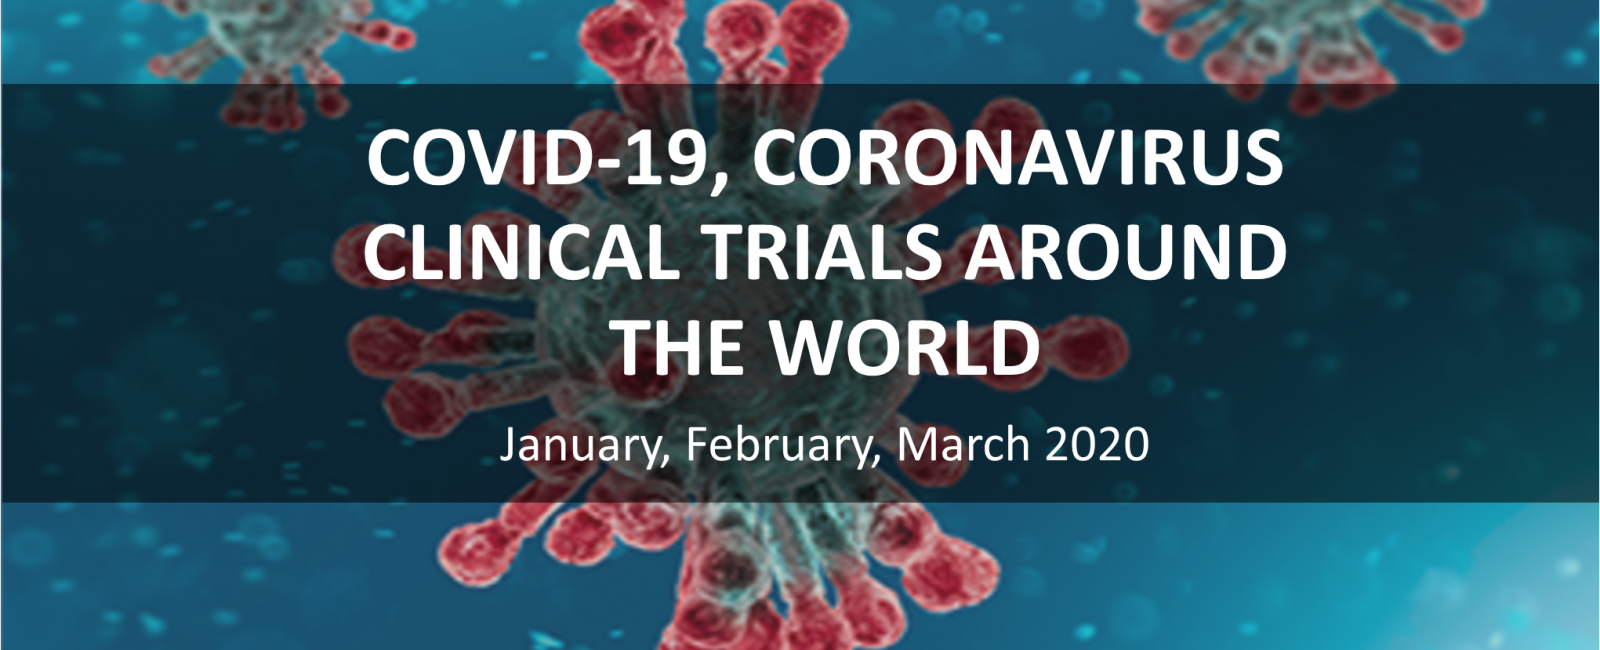 Covid-19 coronavirus clinical trials around the world 1st quarter Update